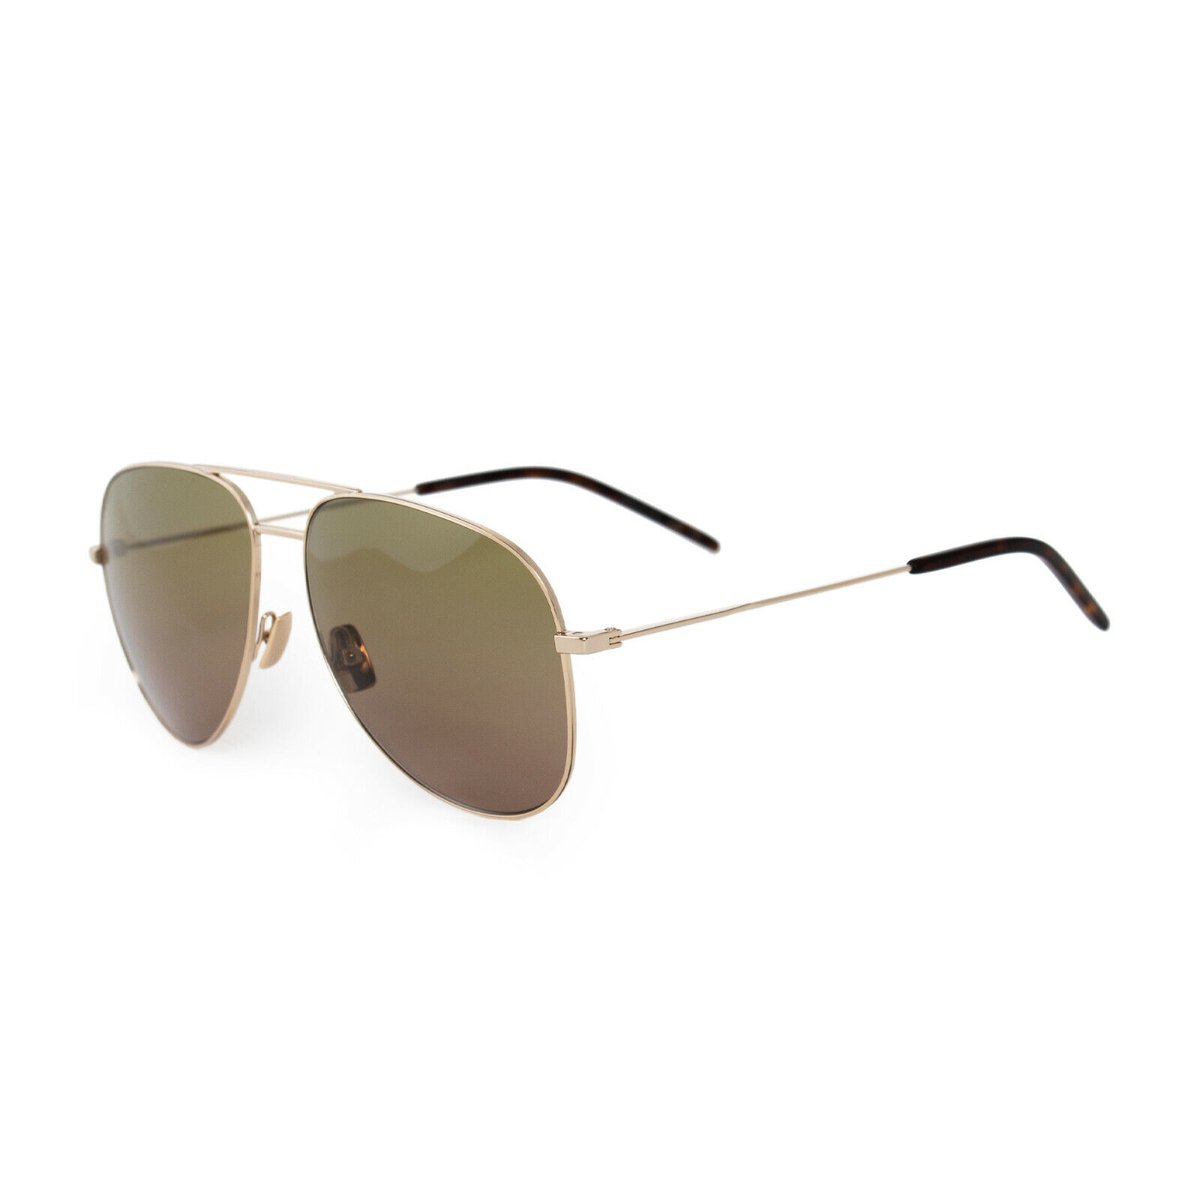 Yves Saint Laurent Classic II-zonnebril-Goud-Groen-59mm